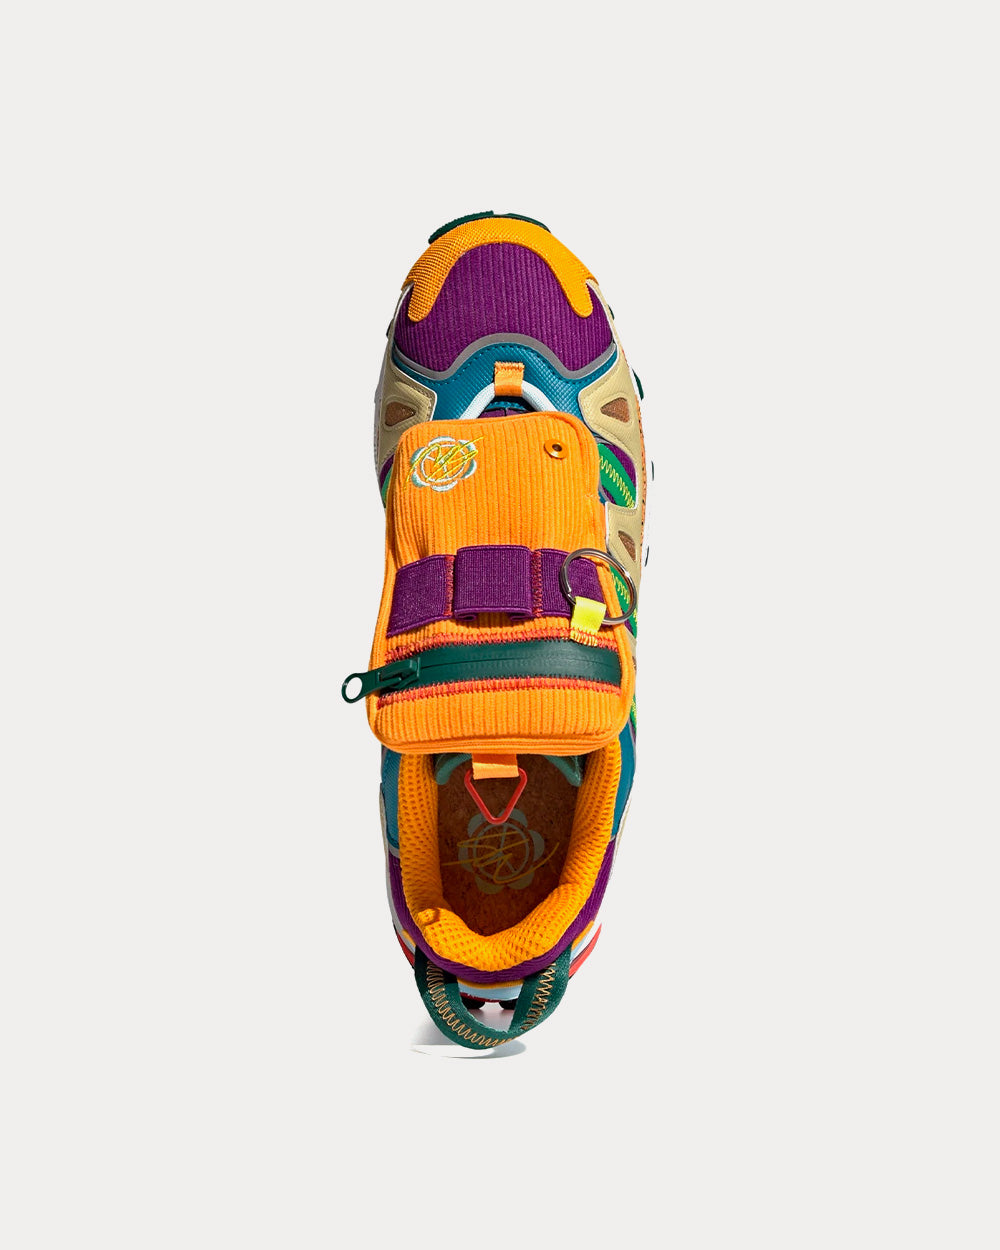 Adidas x Sean Wotherspoon - x Sean Wotherspoon Superturf Adventure Mesa / Amber / Purple Low Top Sneakers